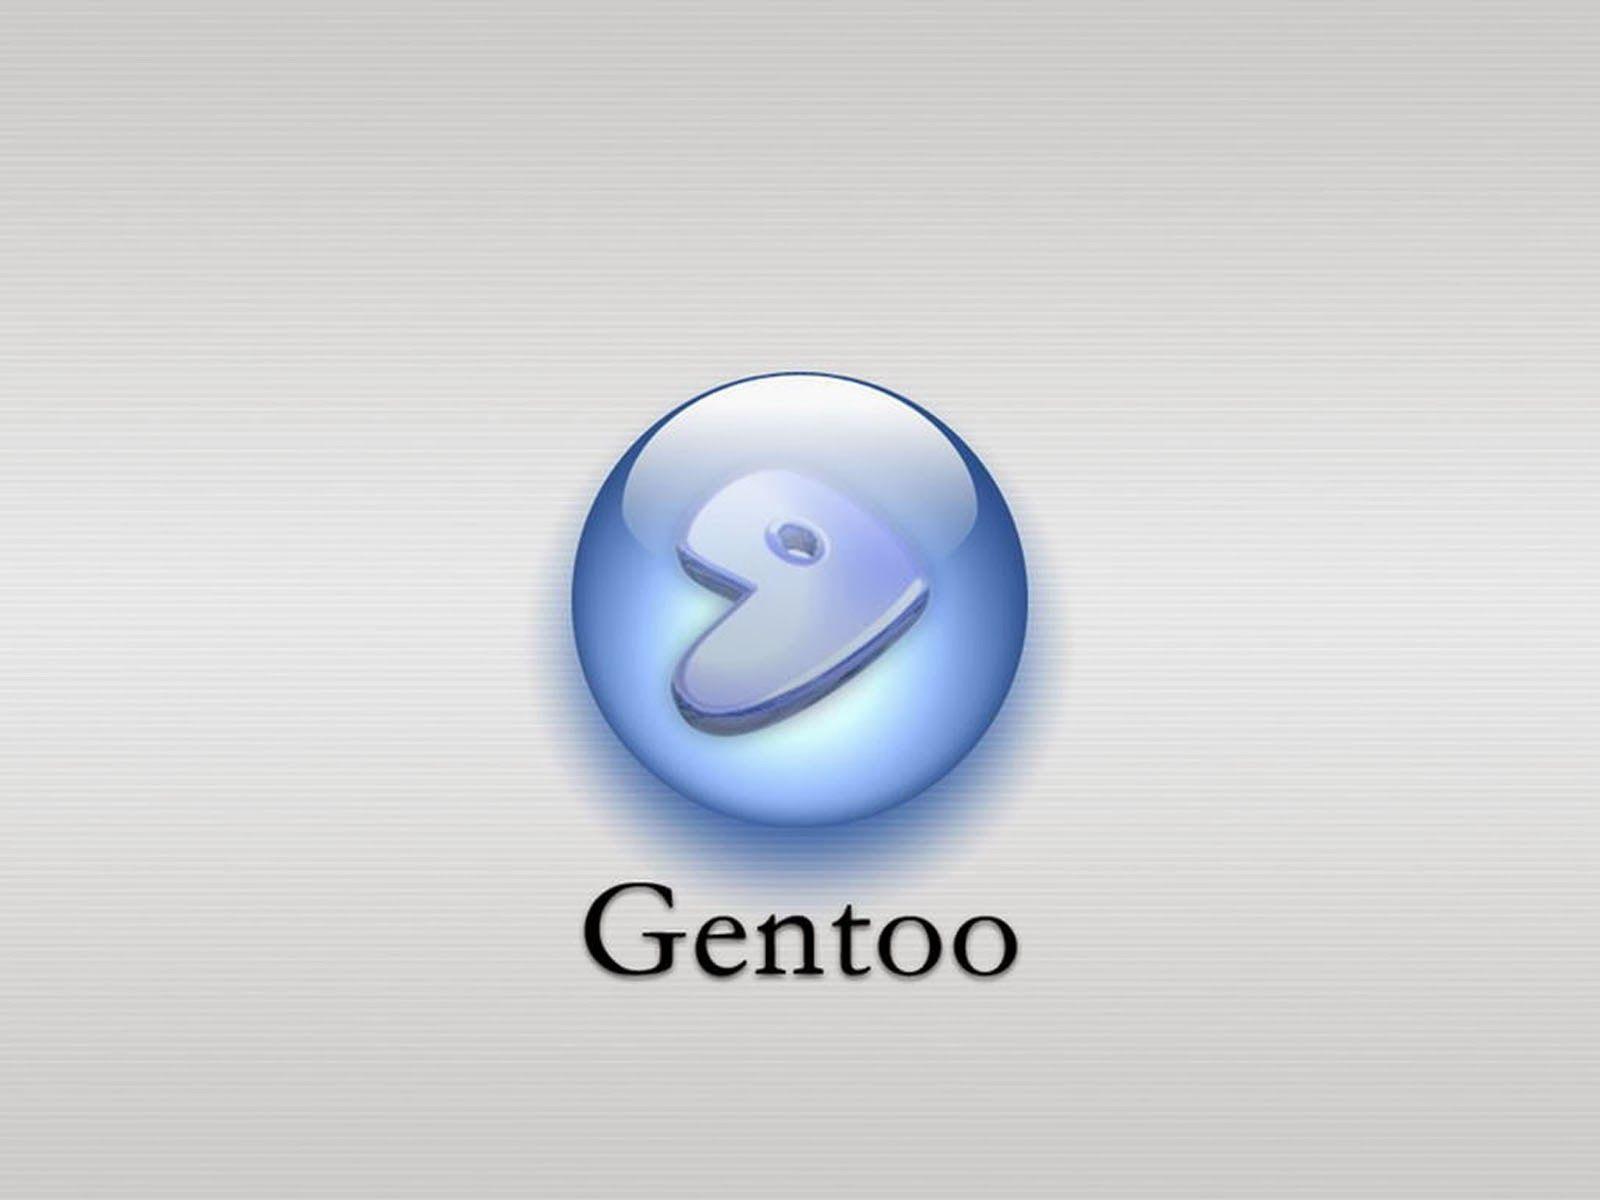 Clovisso Wallpaper Gallery: Gentoo Linux Wallpaper